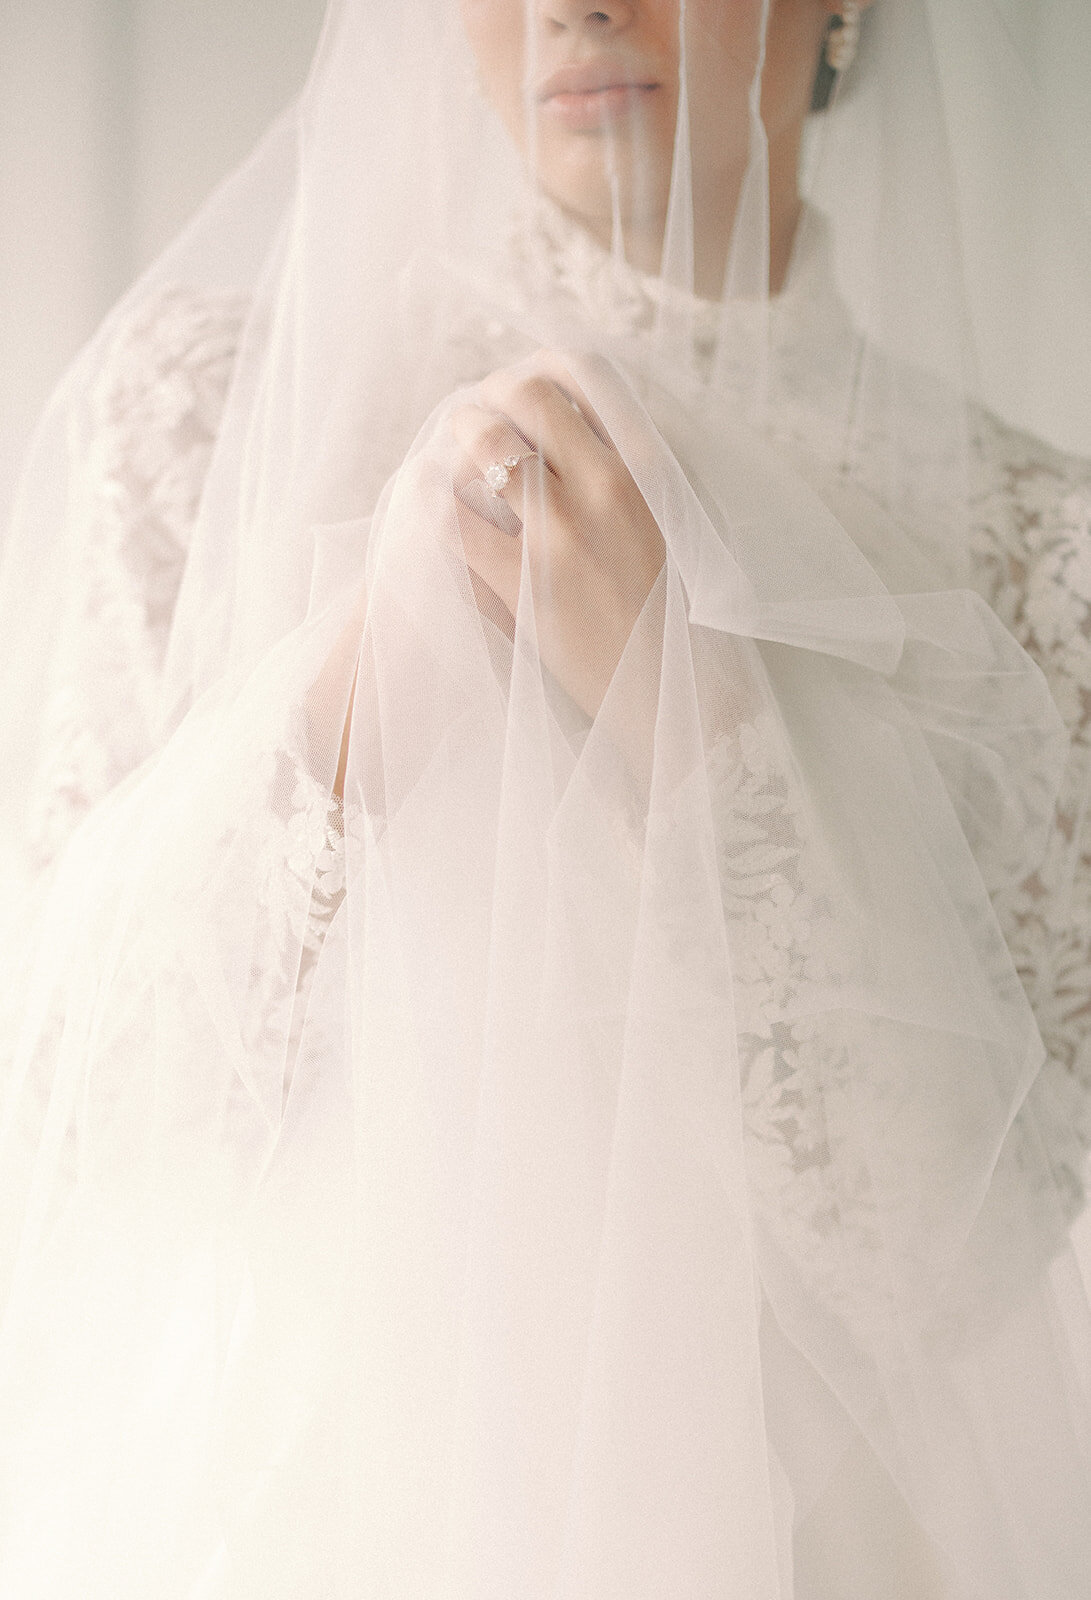 Close-up of bridal dress details underneath her veil